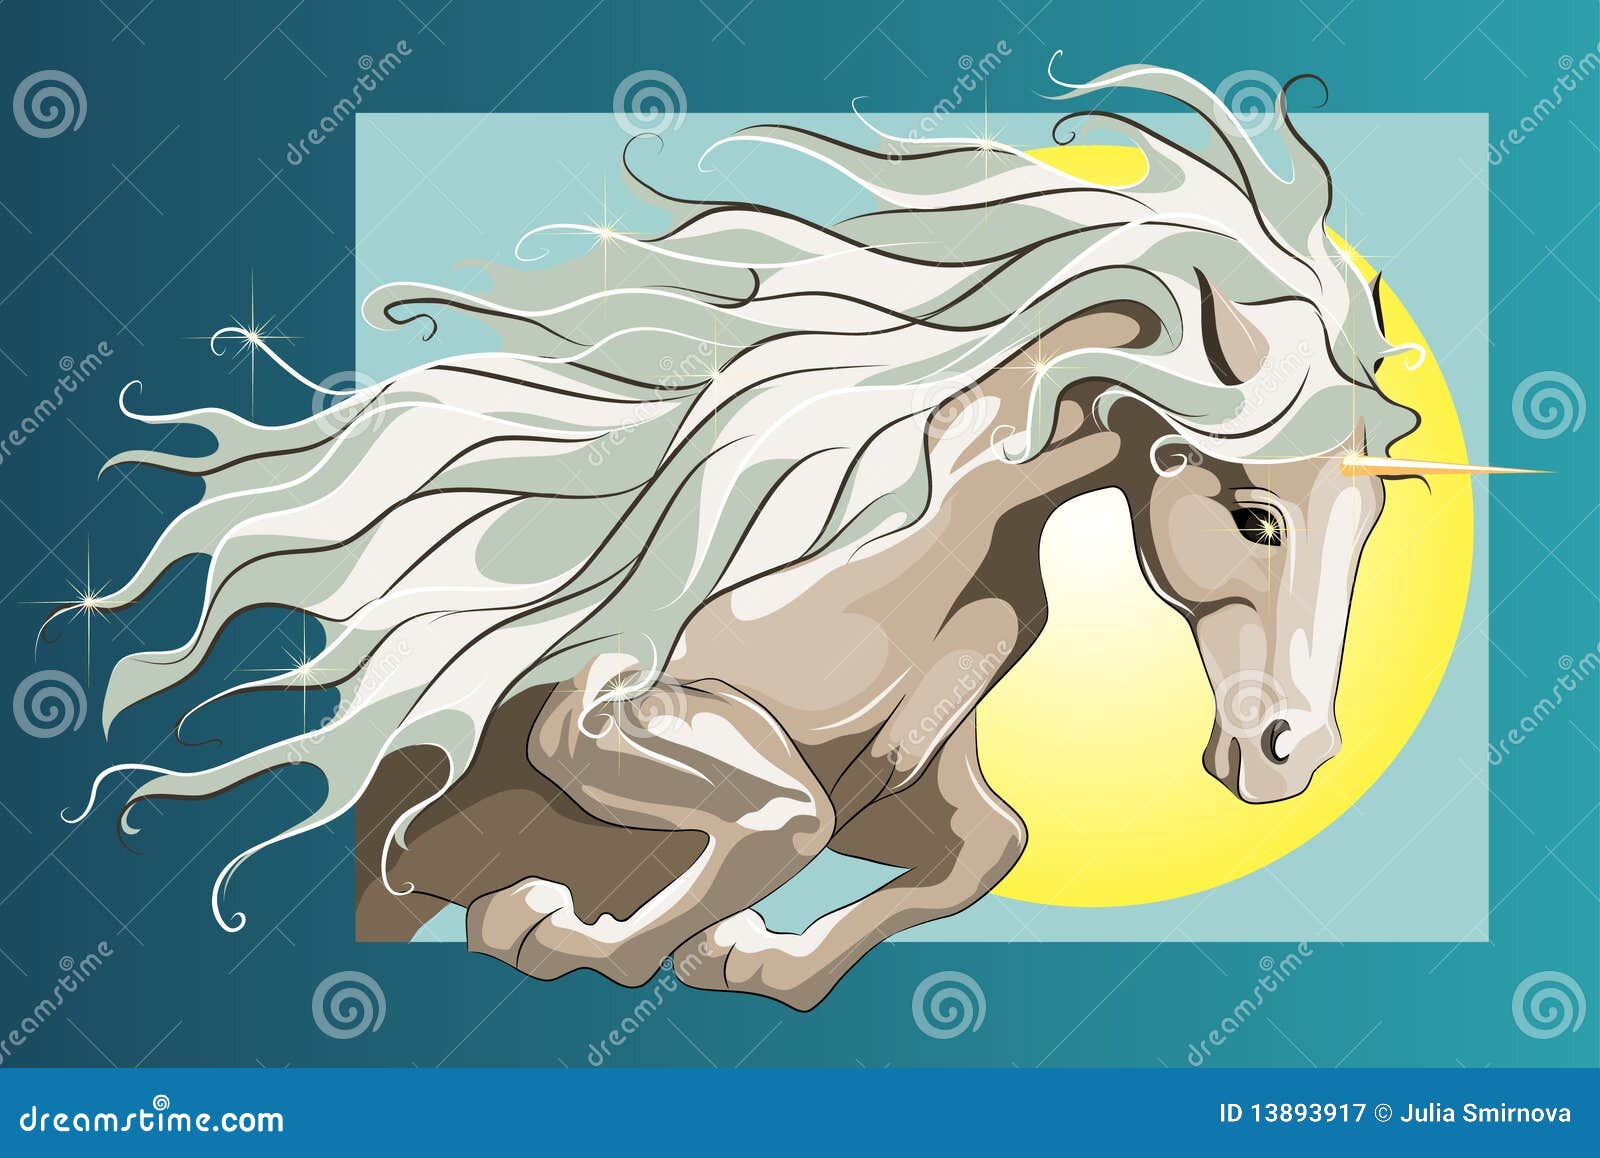 Jumping Unicorn Royalty Free Stock Photography - Image: 13893917